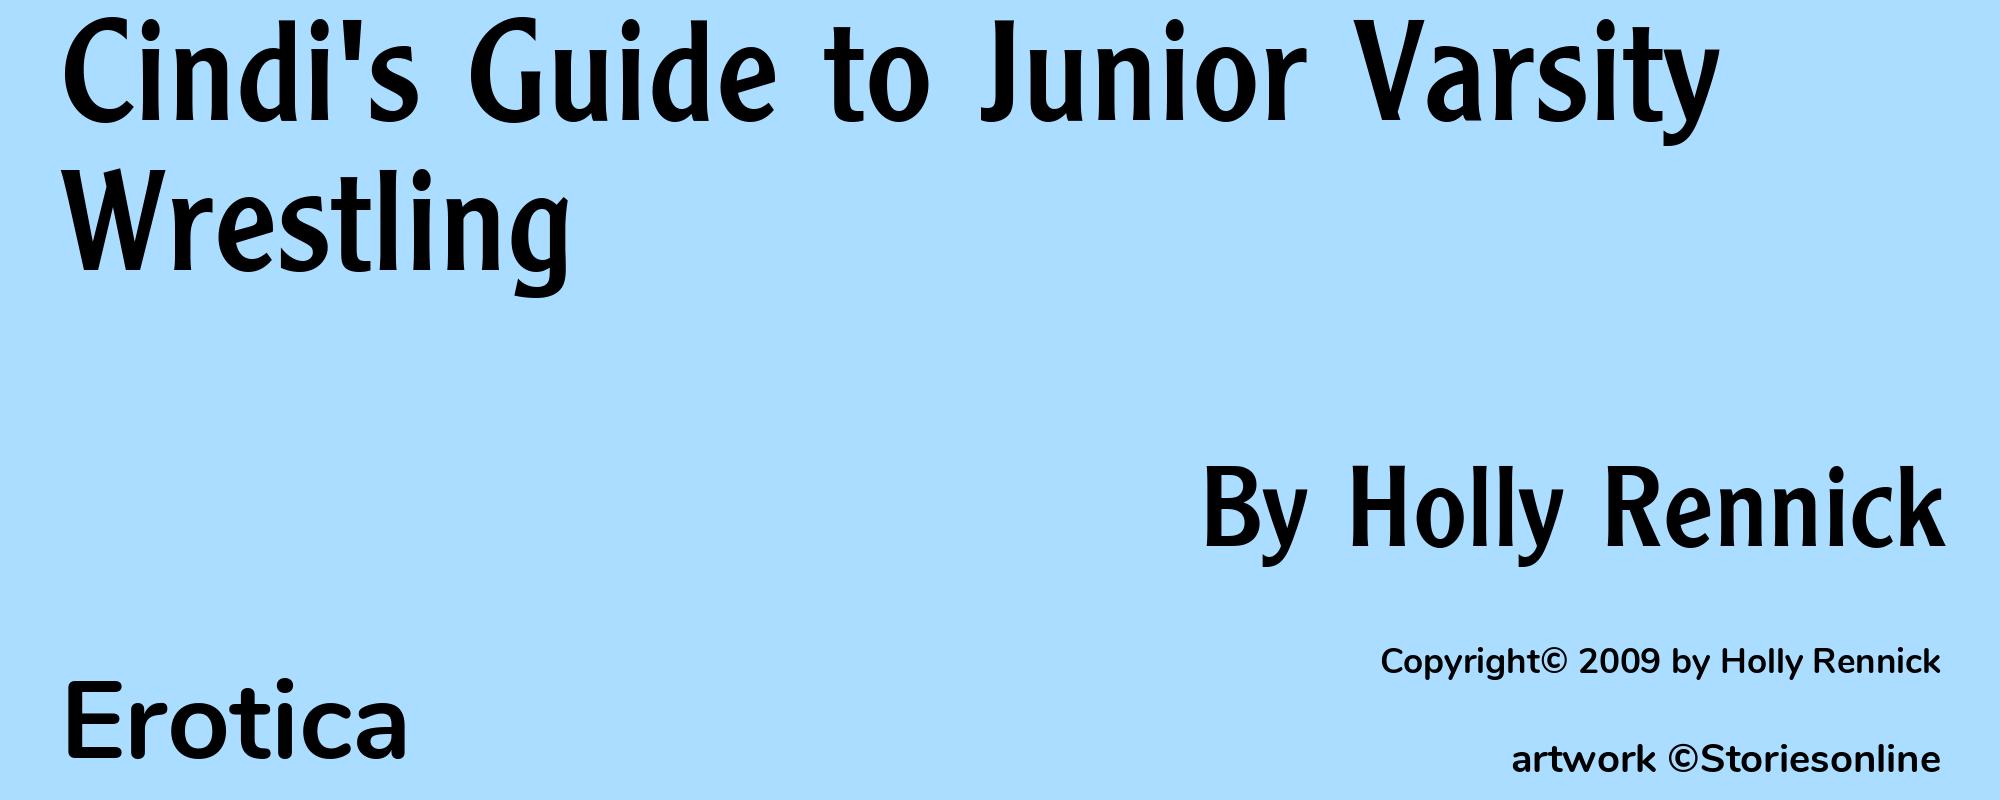 Cindi's Guide to Junior Varsity Wrestling - Cover